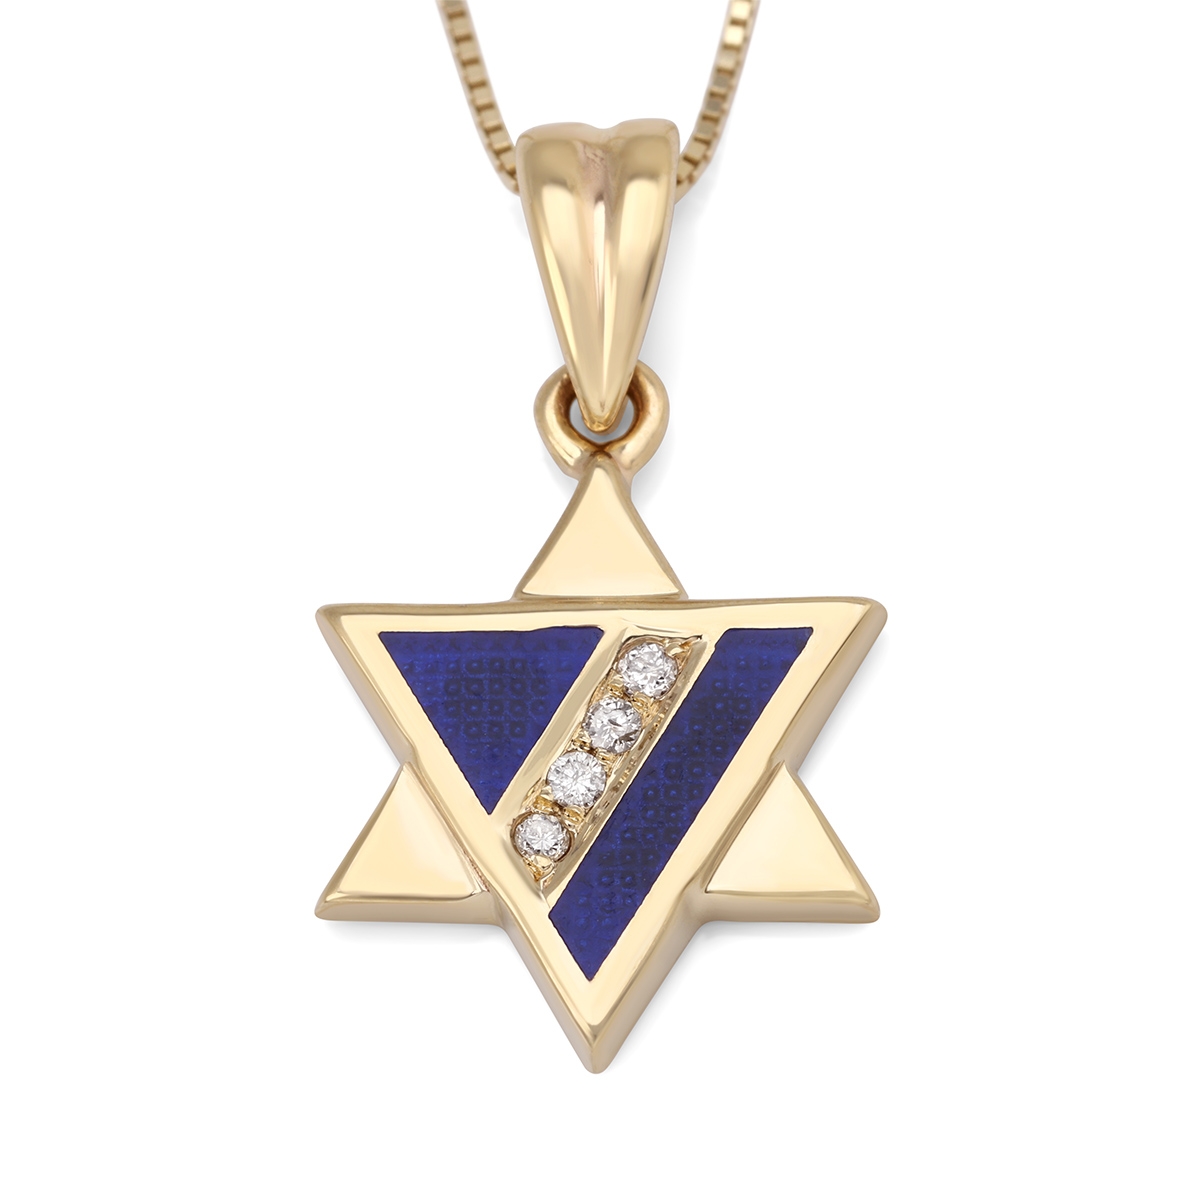 Stylish Star of David 14K Yelow Gold Pendant Necklace With White Diamonds - 1